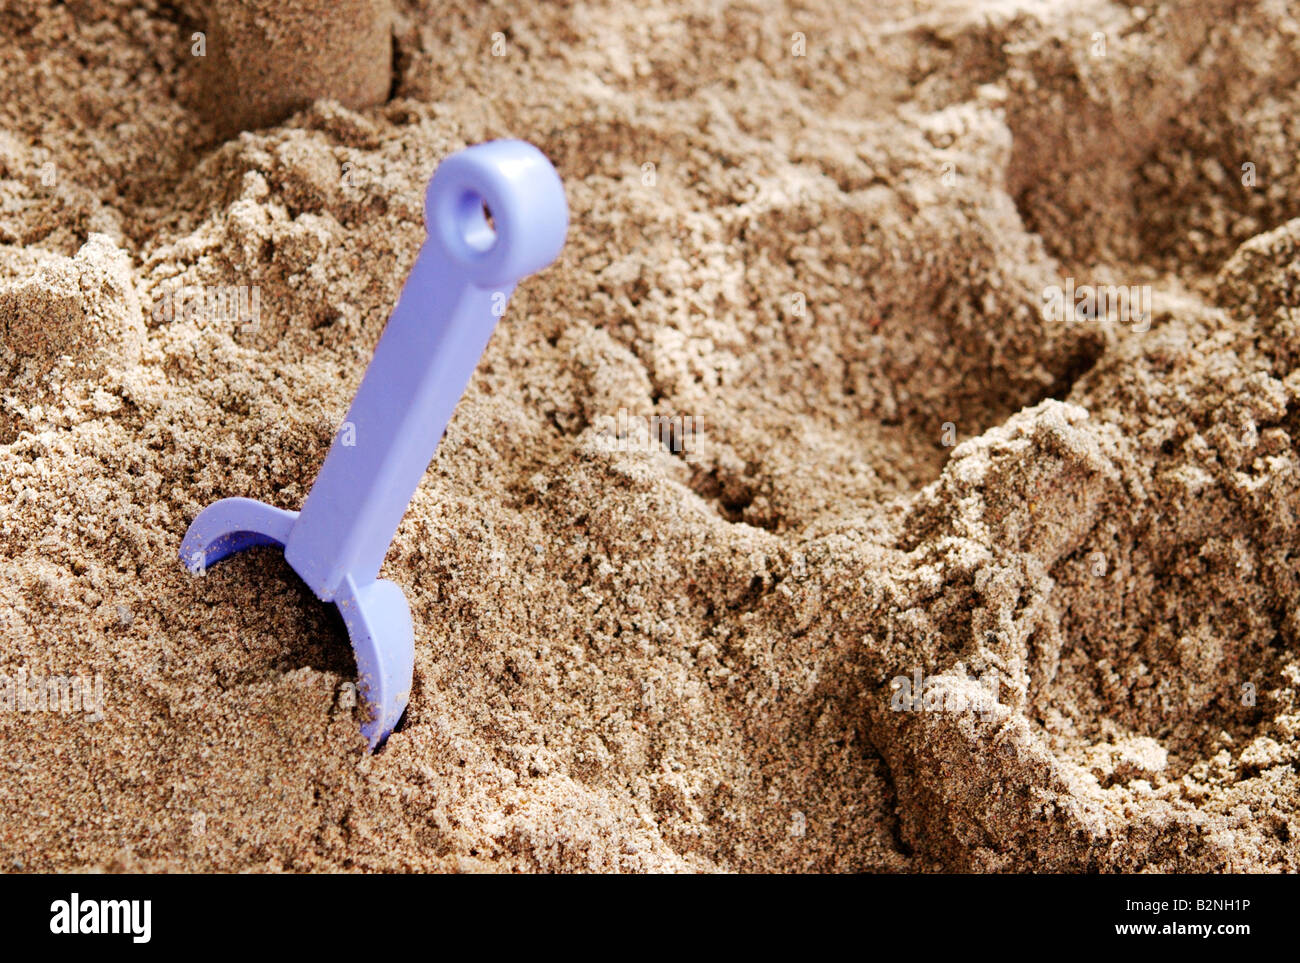 Plastic toy shovel in sandbox Stock Photo